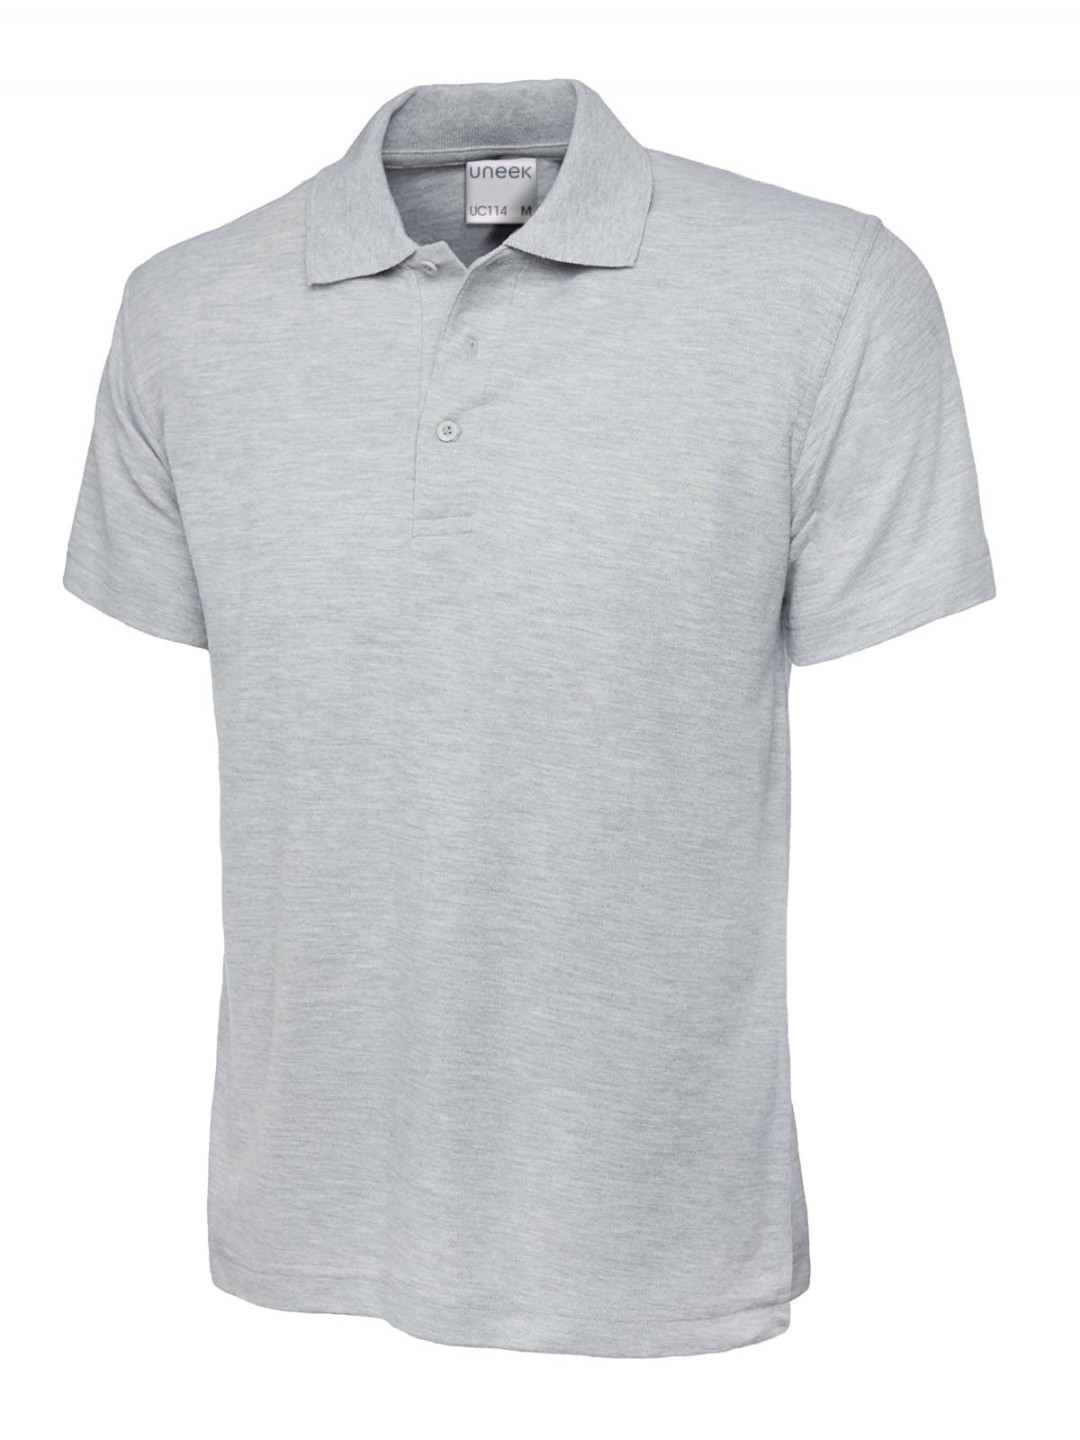 Uneek Men's Ultra Cotton Poloshirt - Industrial Workwear